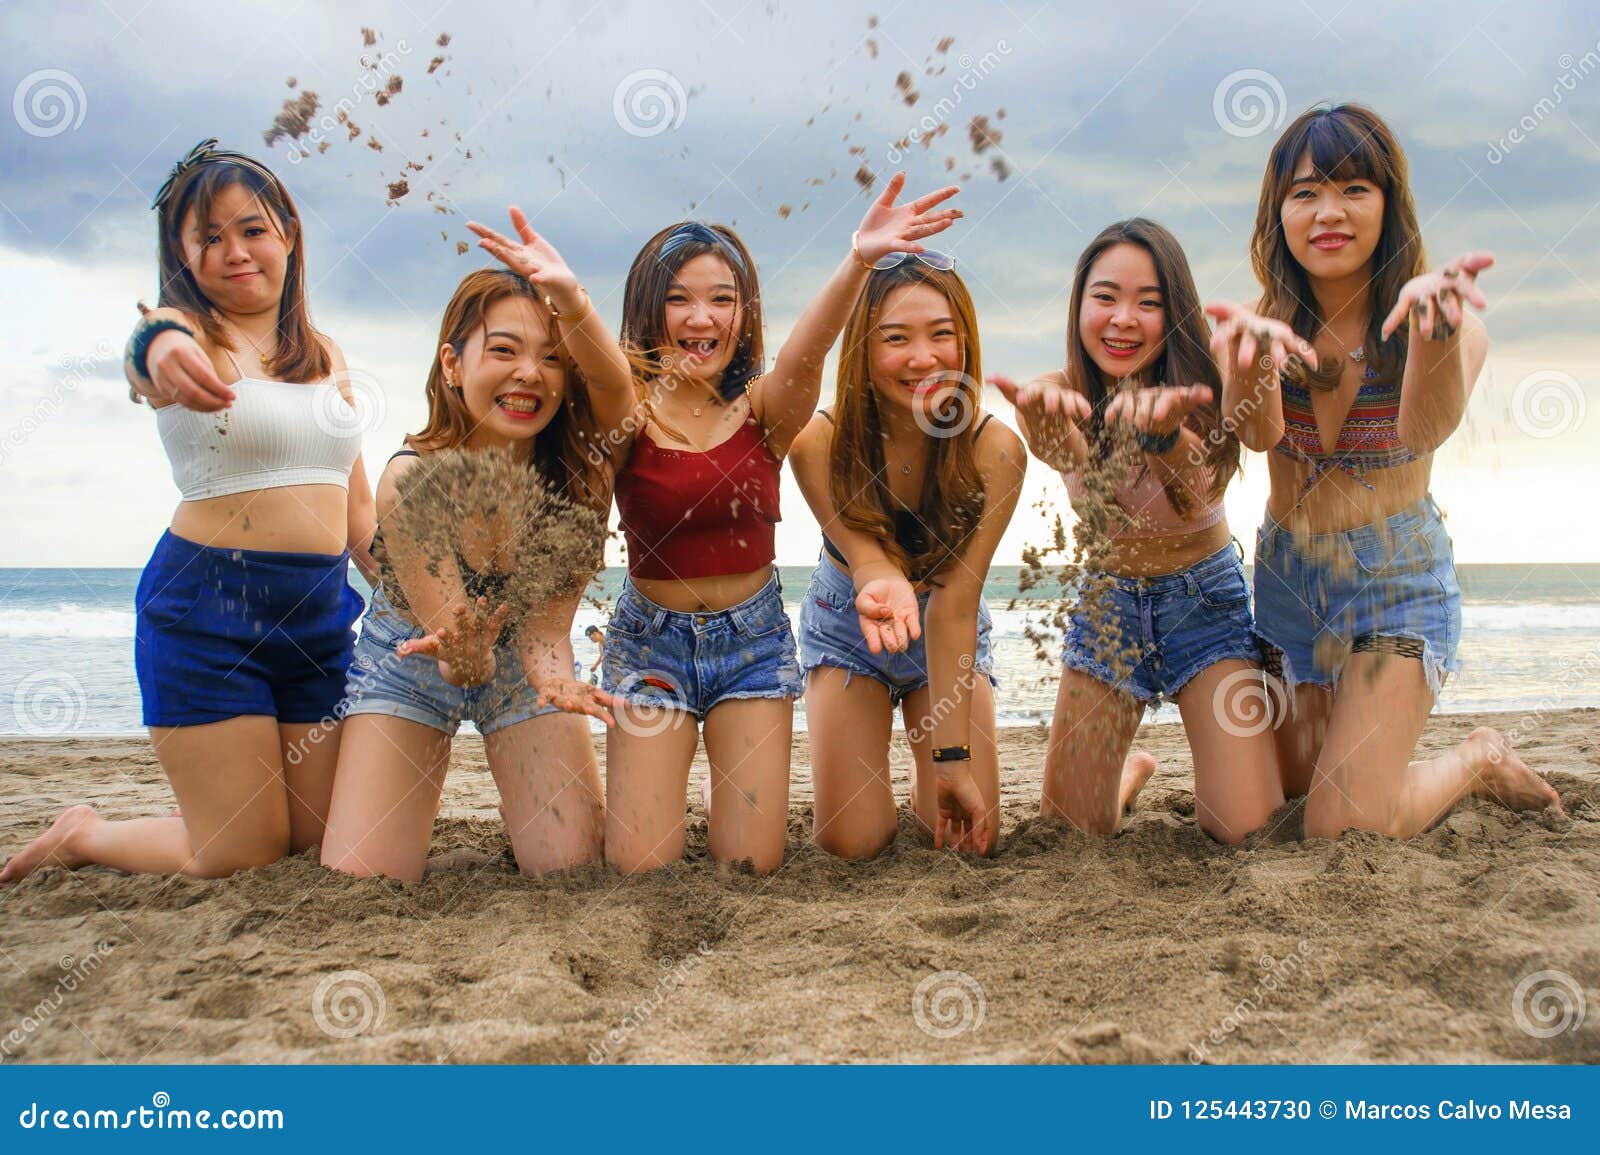 Nude Girls Of Corea Alta California Free Download Nude Photo Gallery